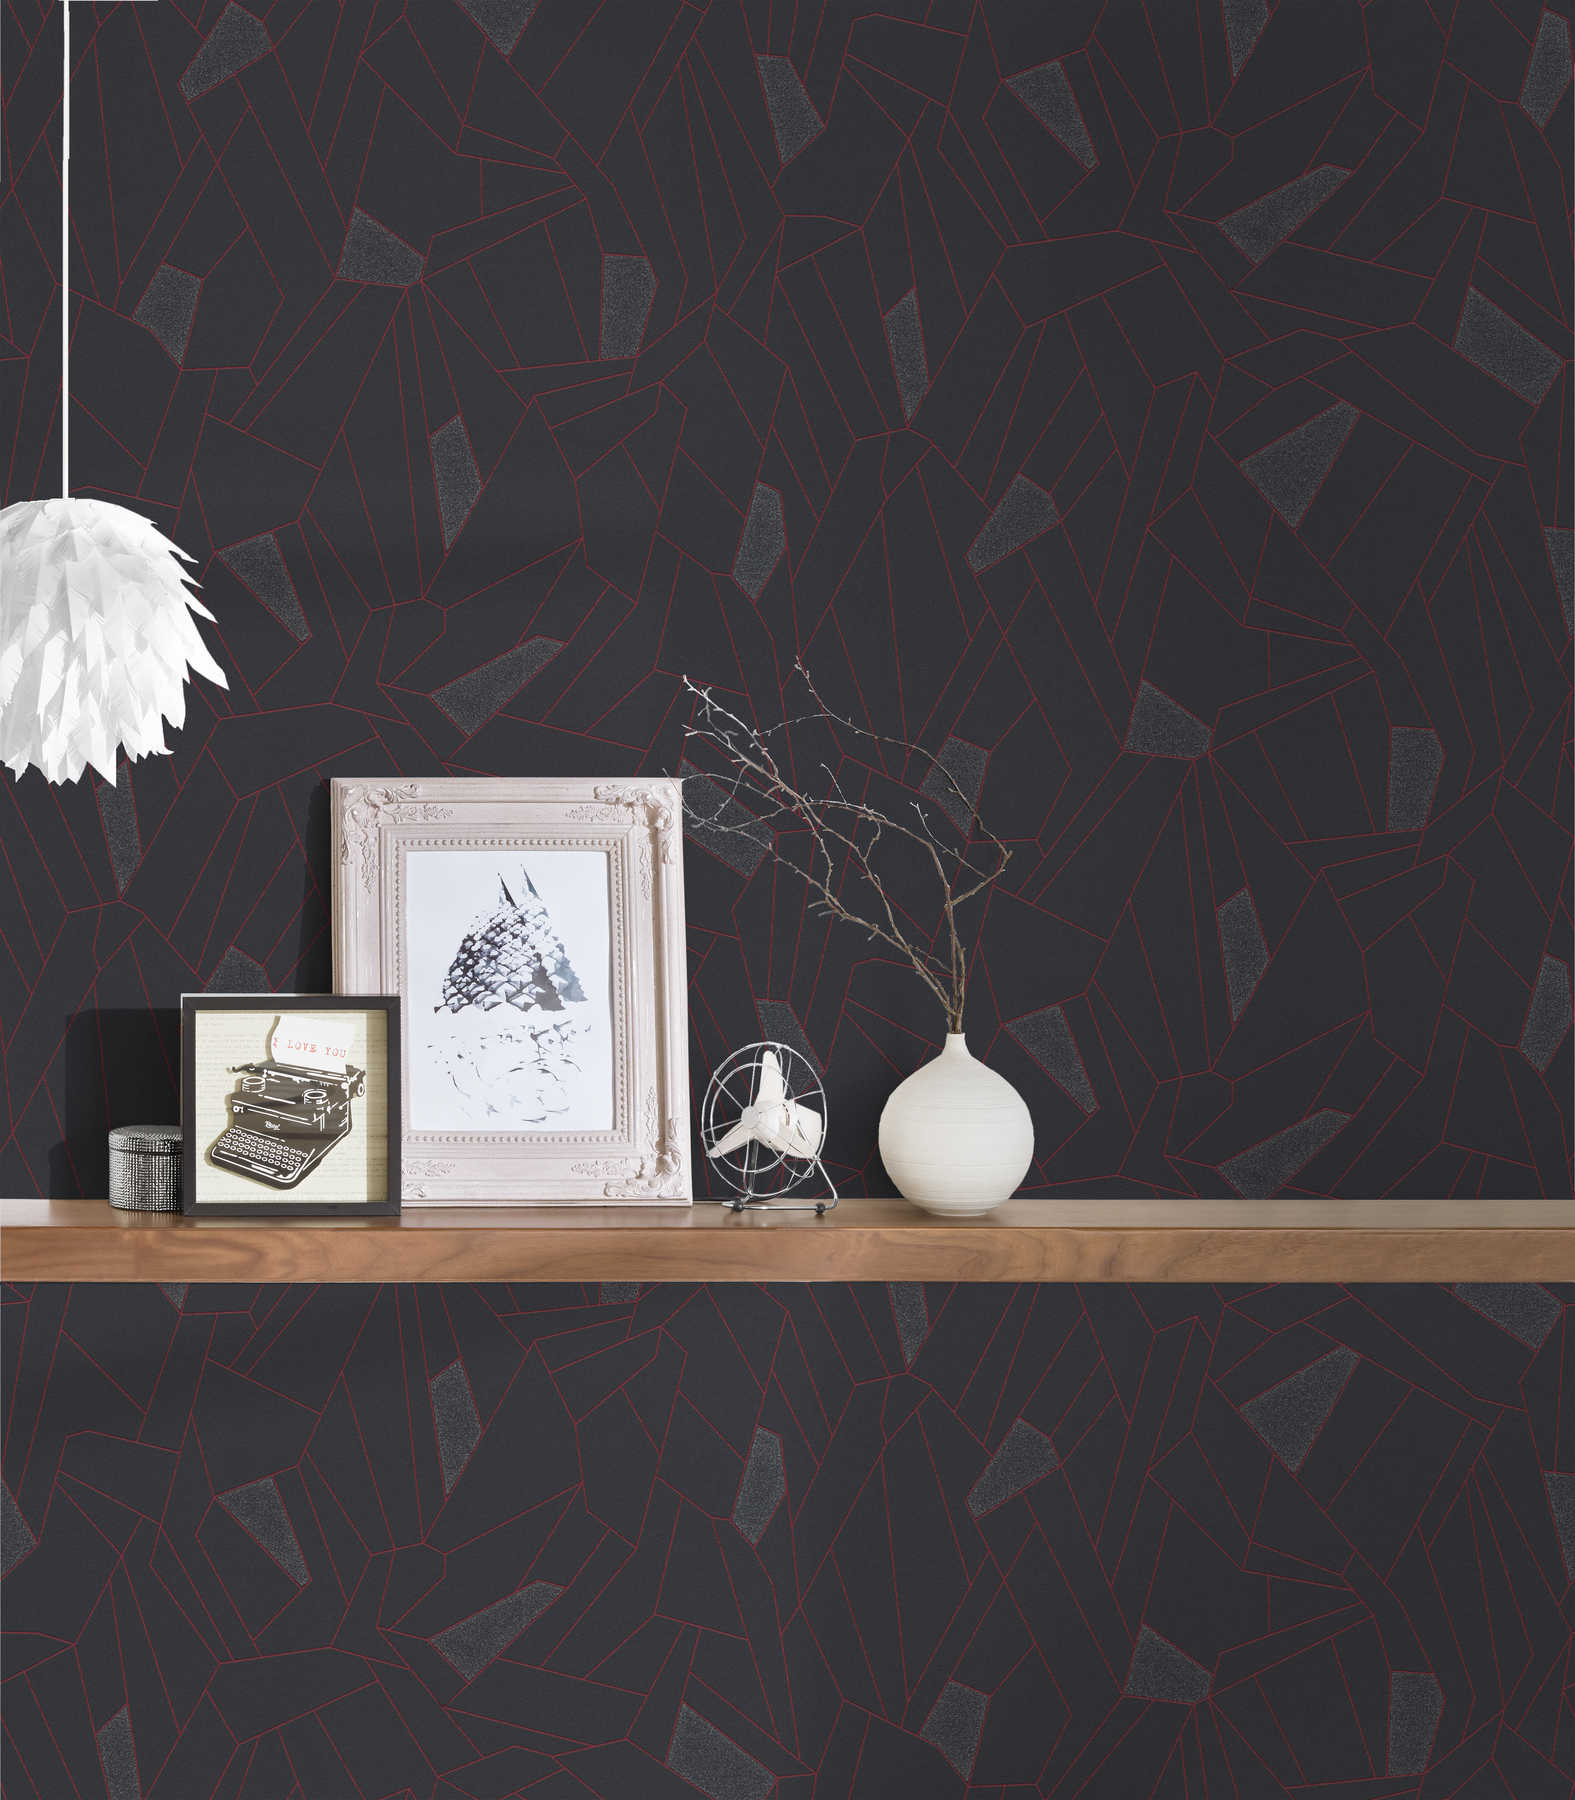             Wallpaper line pattern, metallic & gloss effect - anthracite, grey, red
        